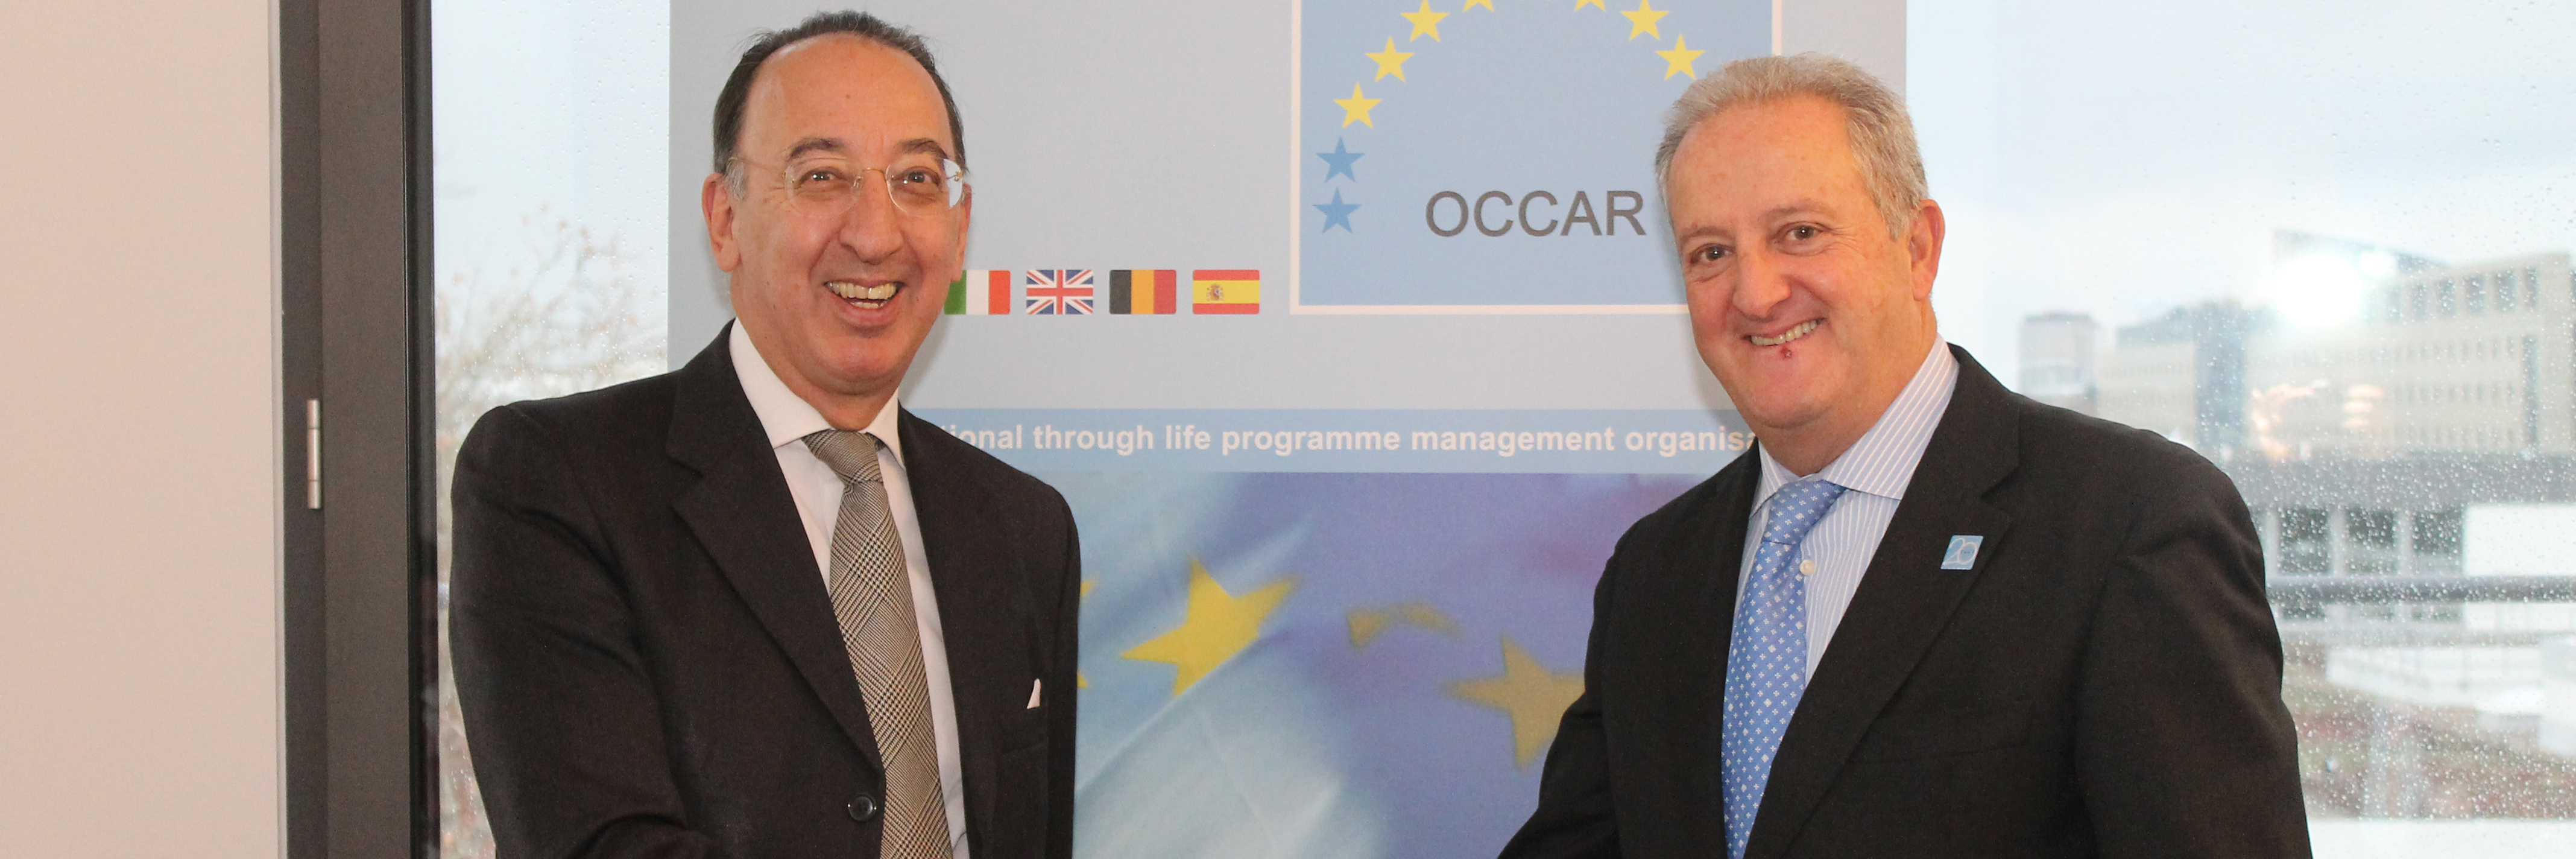 OCCAR-EDA exchange of letter on European Secure Software defined Radio (ESSOR) programme